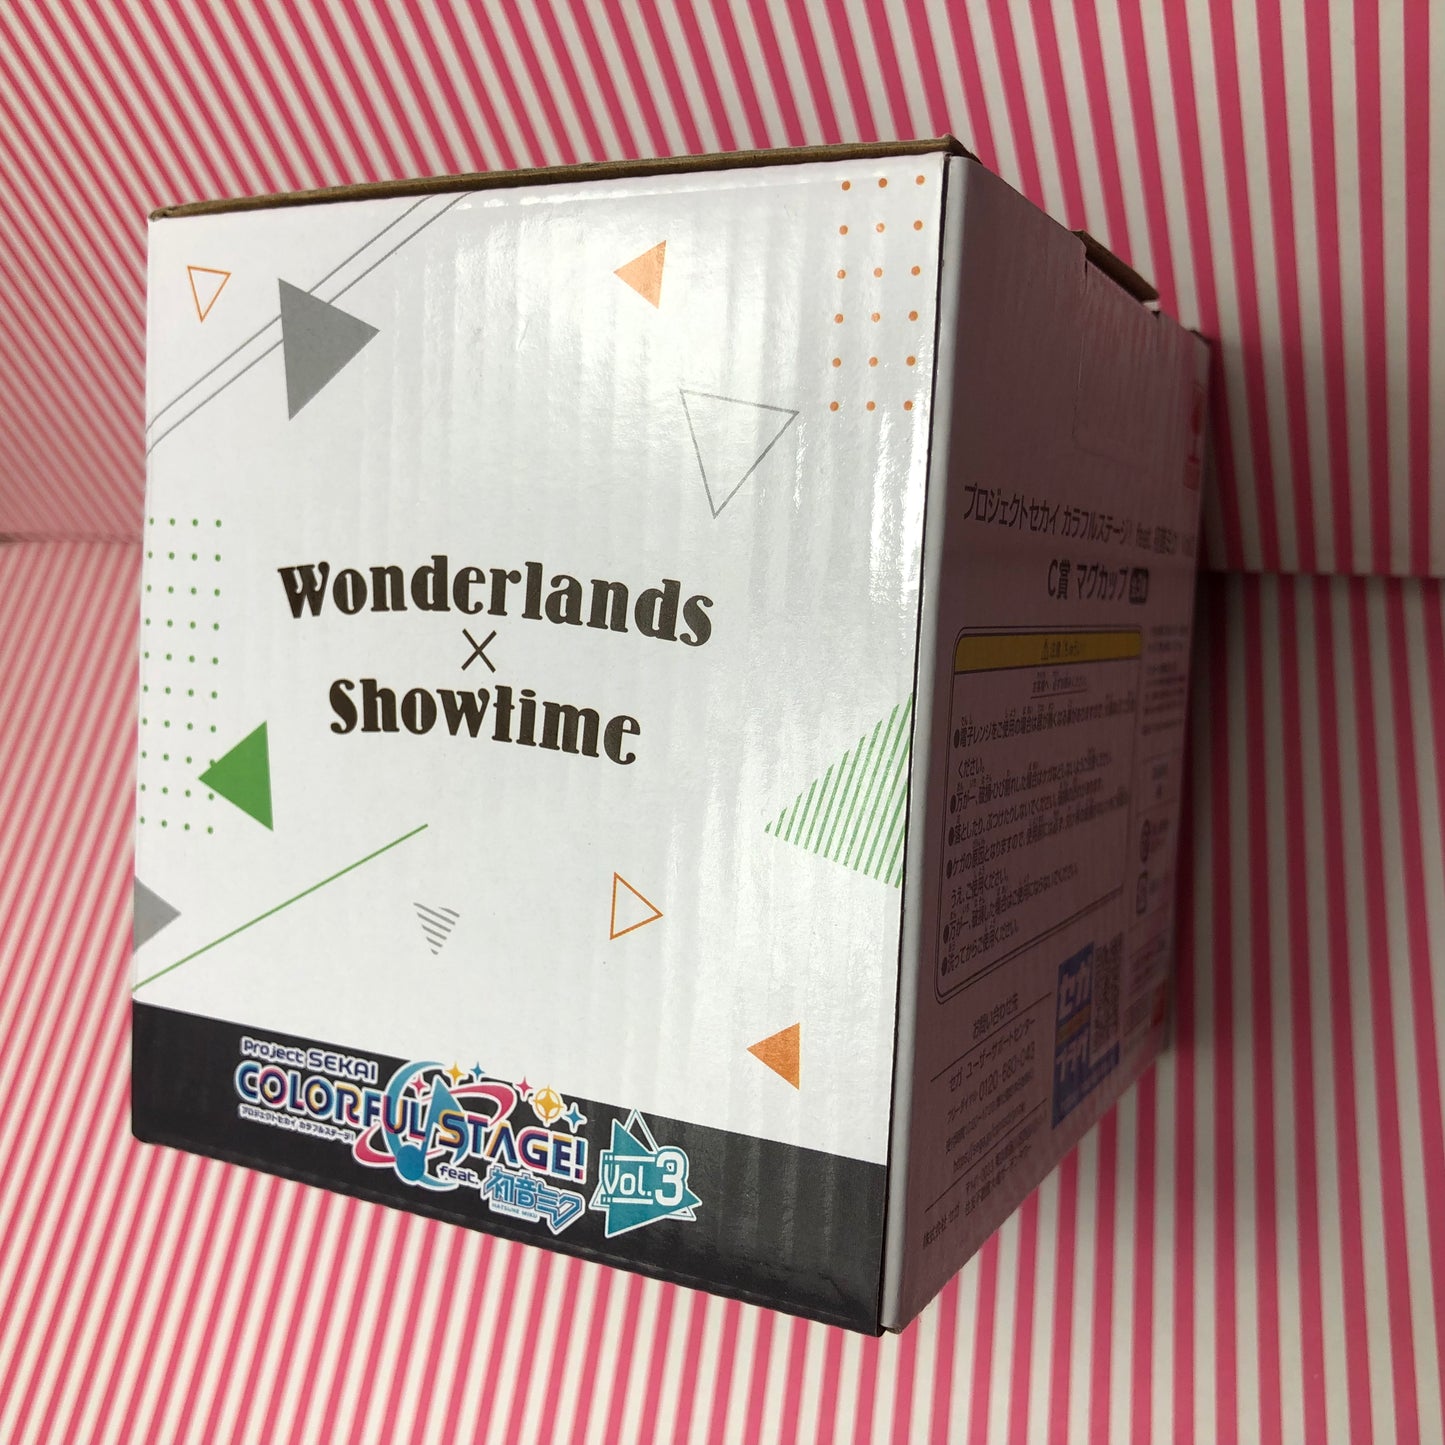 Taza C Vol.3 Wonderlands x Showtime Project Sekai Colorful Stage!